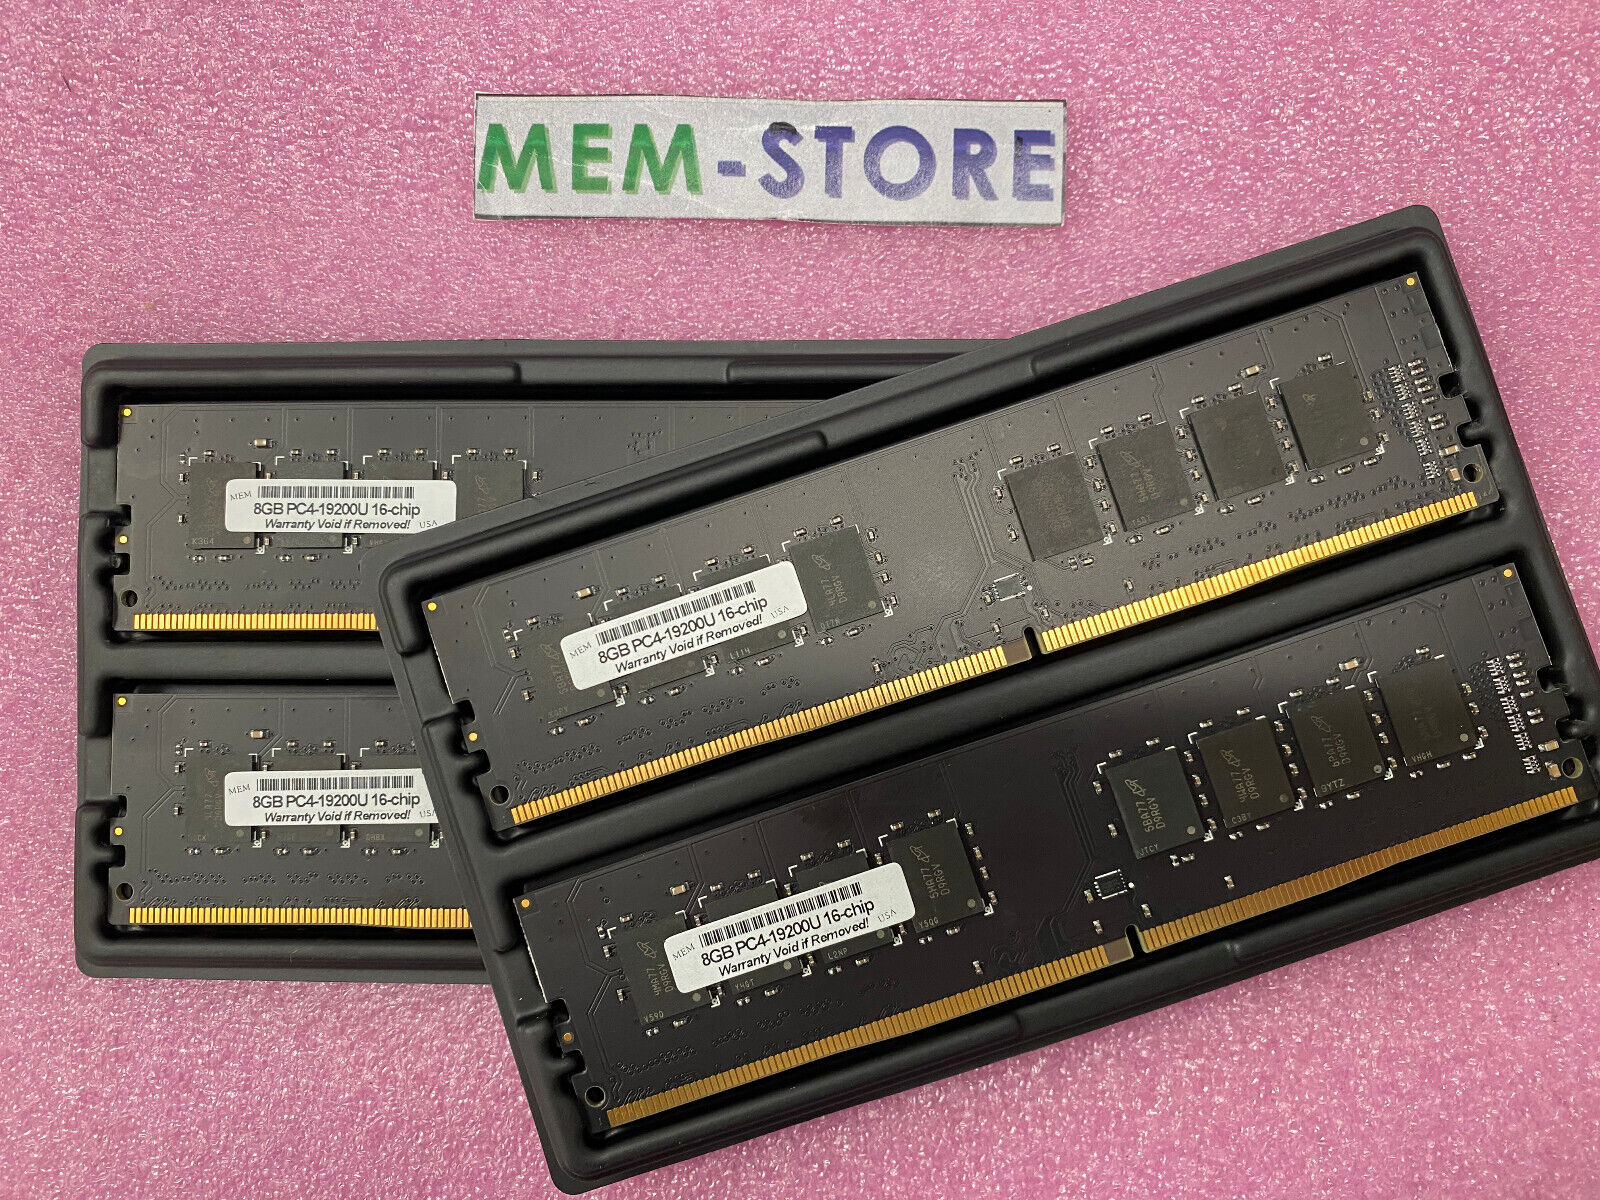 32GB kit 4x8GB 16-chip UDIMM DDR4 Memory RAM 2400MHz for Intel CPU Desktops